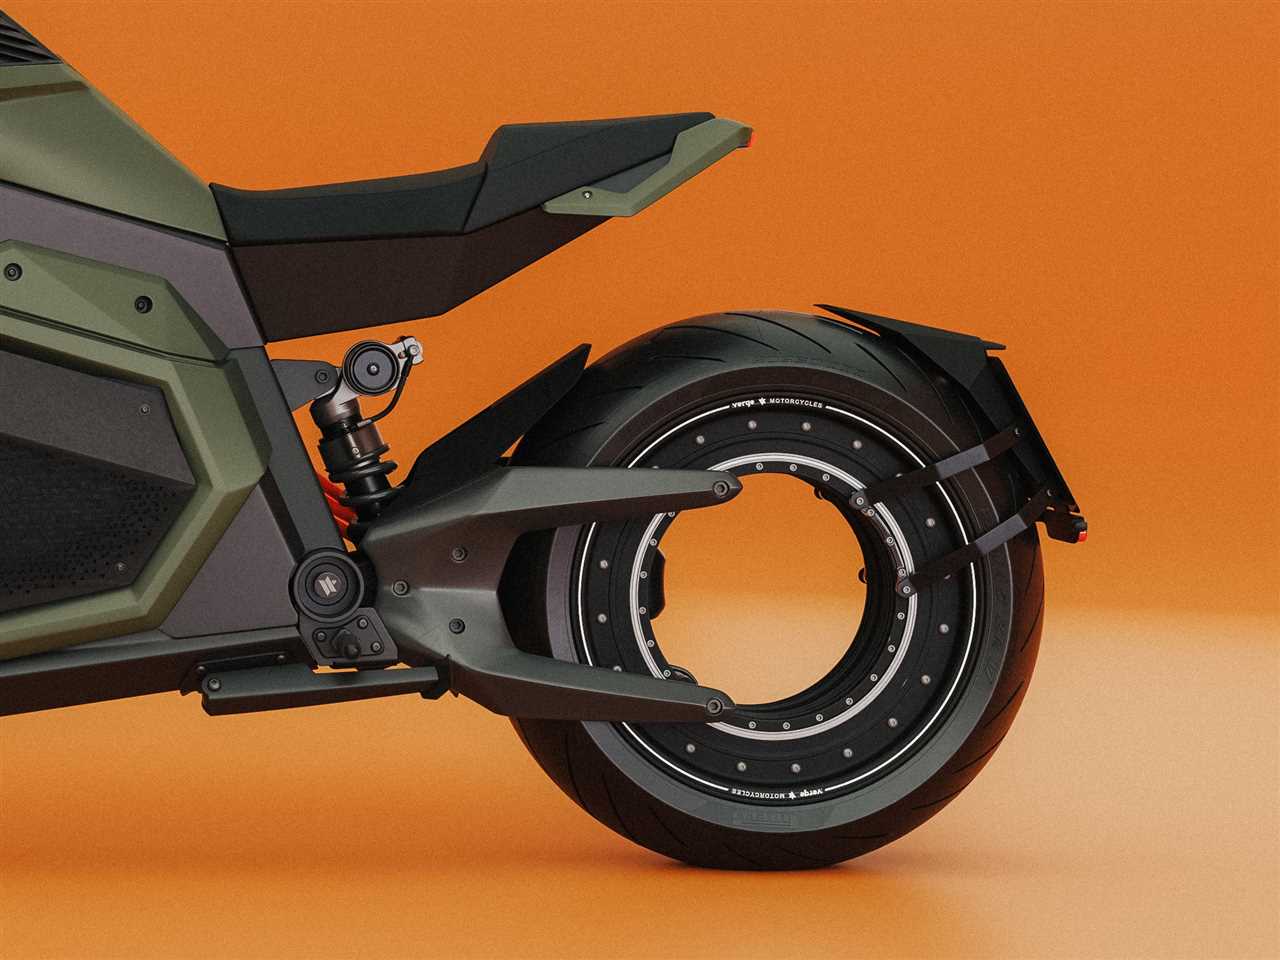 Futuristic Motorcycle Designs